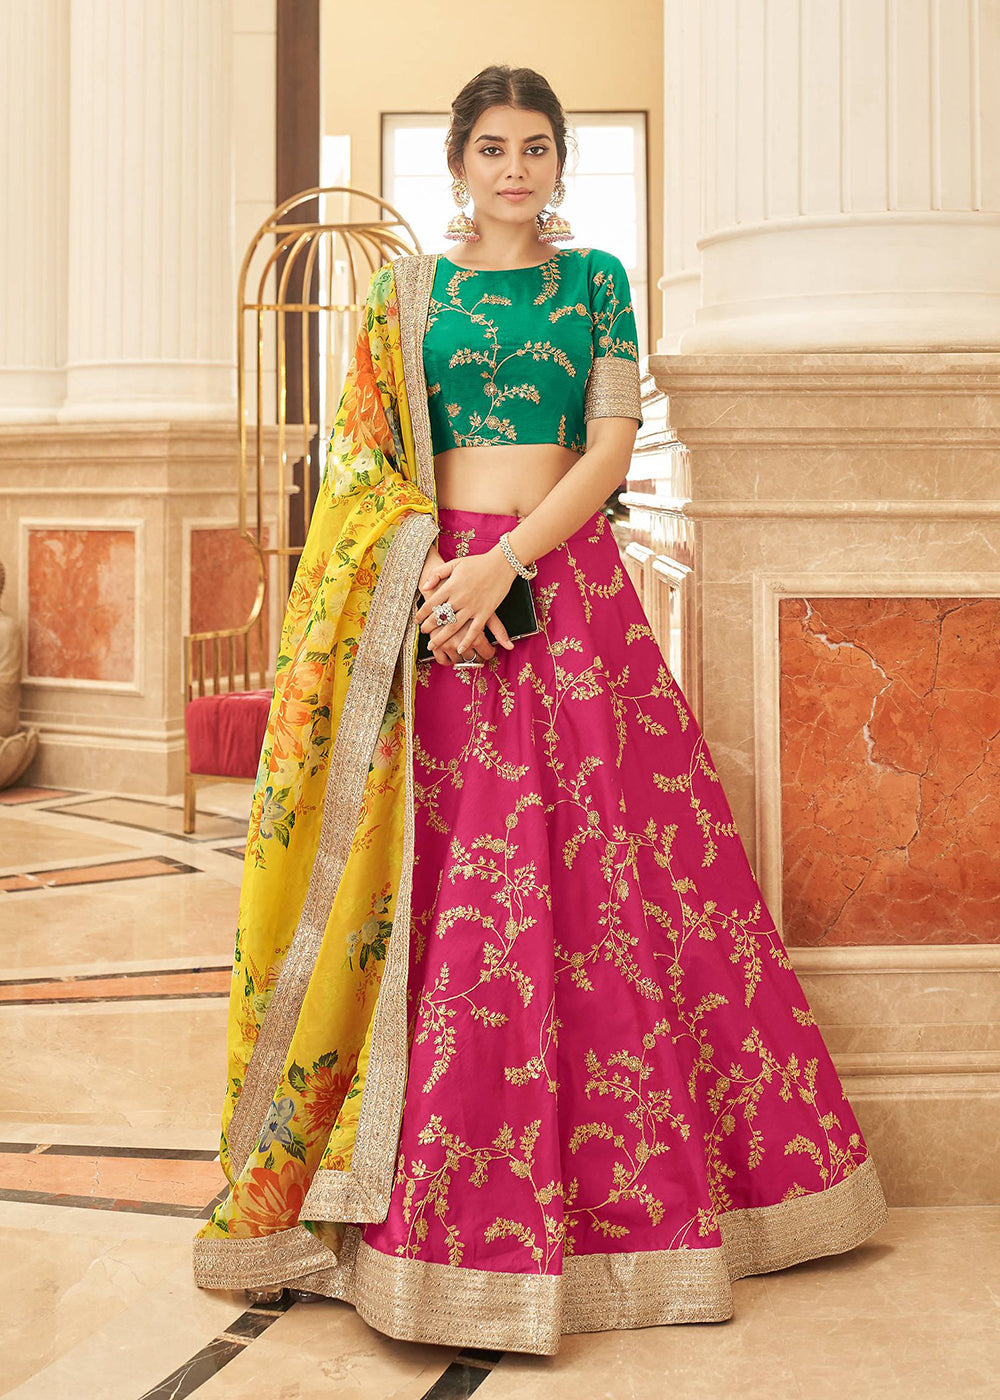 Buy Now Appealing Pink & Green Art Silk Embroidery Wedding Lehenga Choli Online in USA, UK, Canada & Worldwide at Empress Clothing.